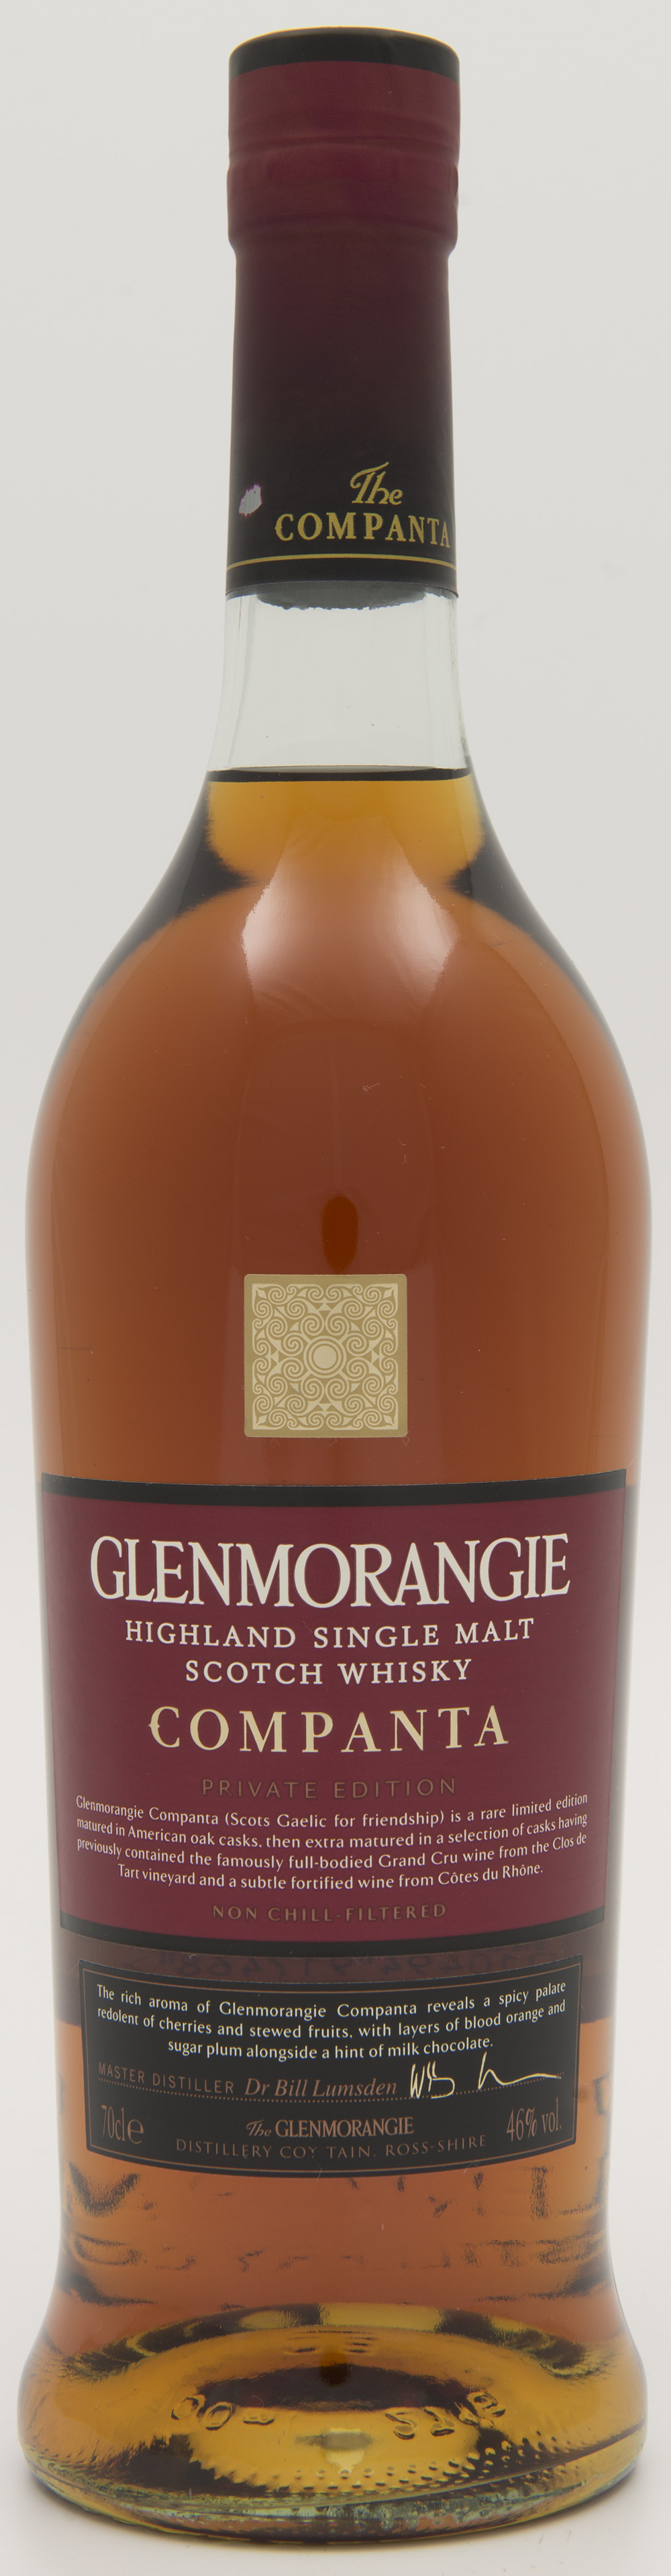 Billede: DSC_4187 Glenmorangie Companta - bottle front.jpg